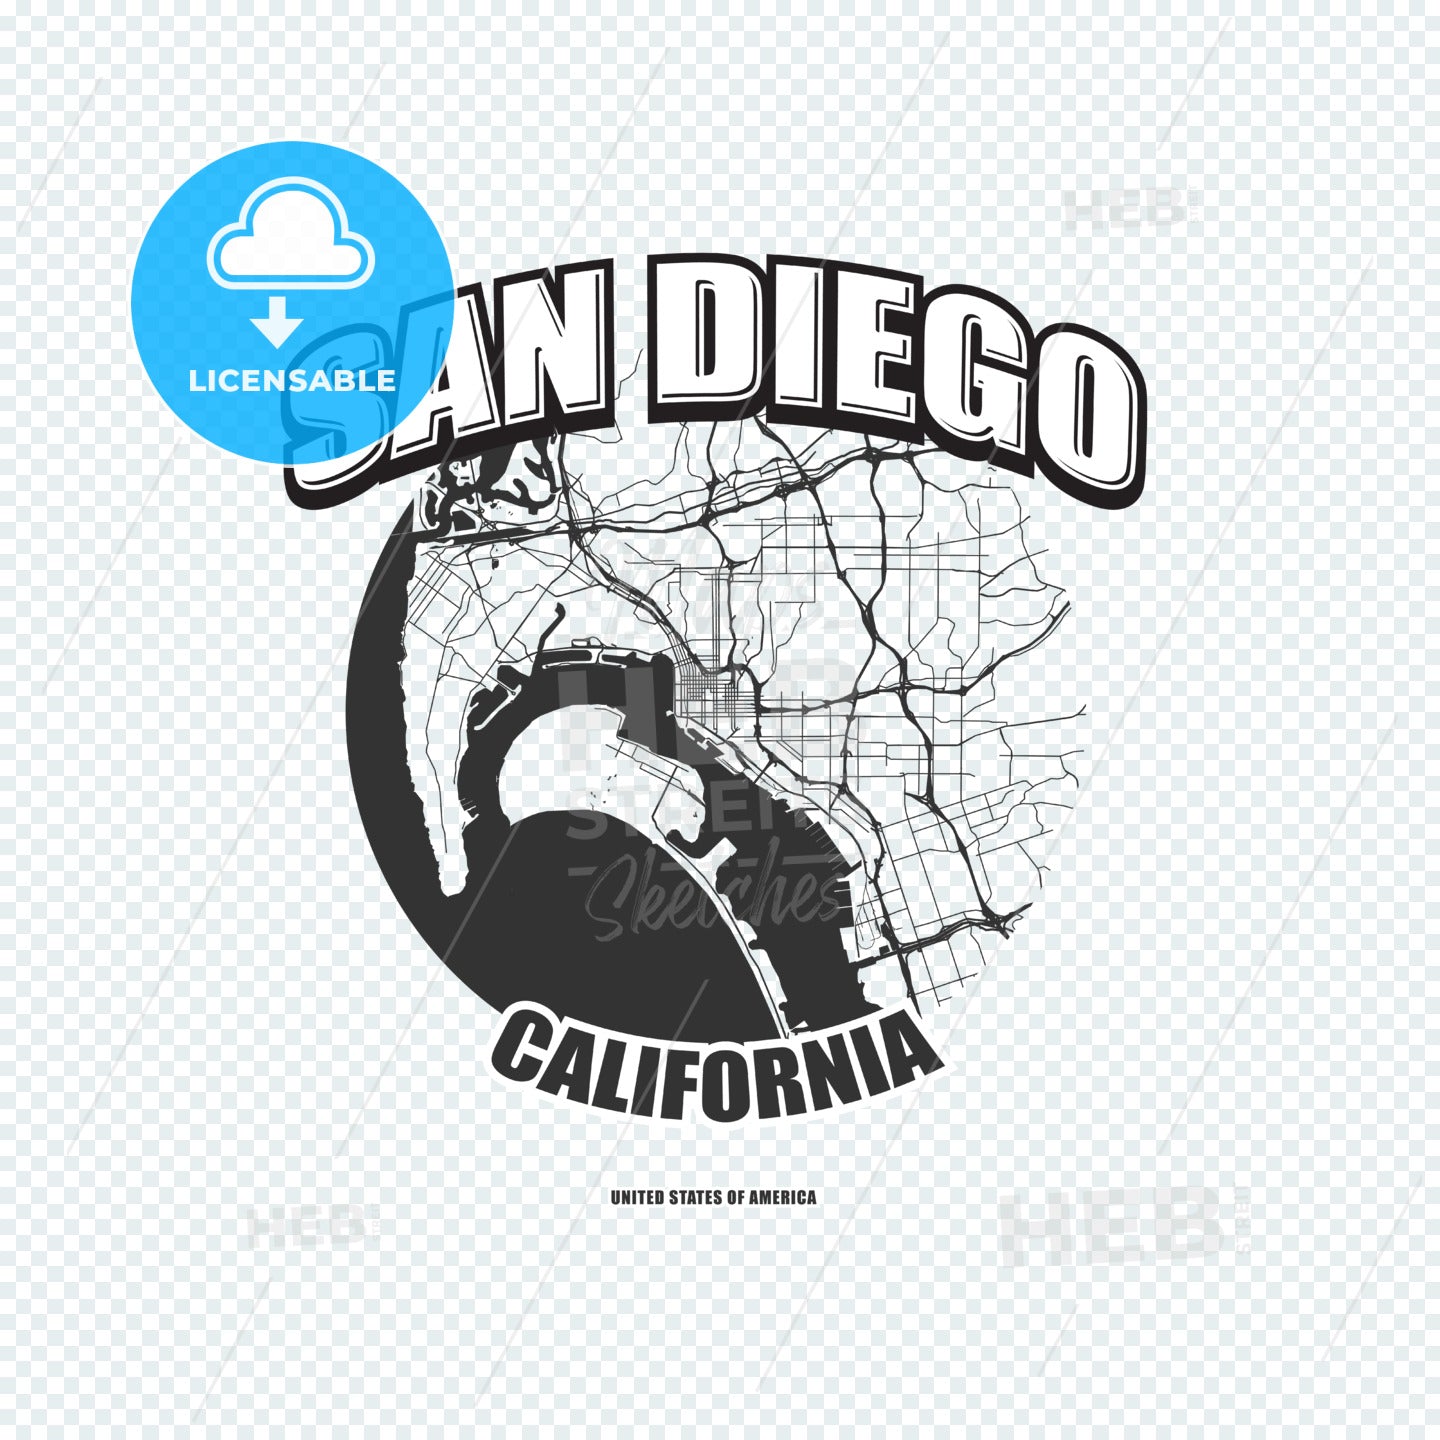 San Diego, California, logo artwork – instant download